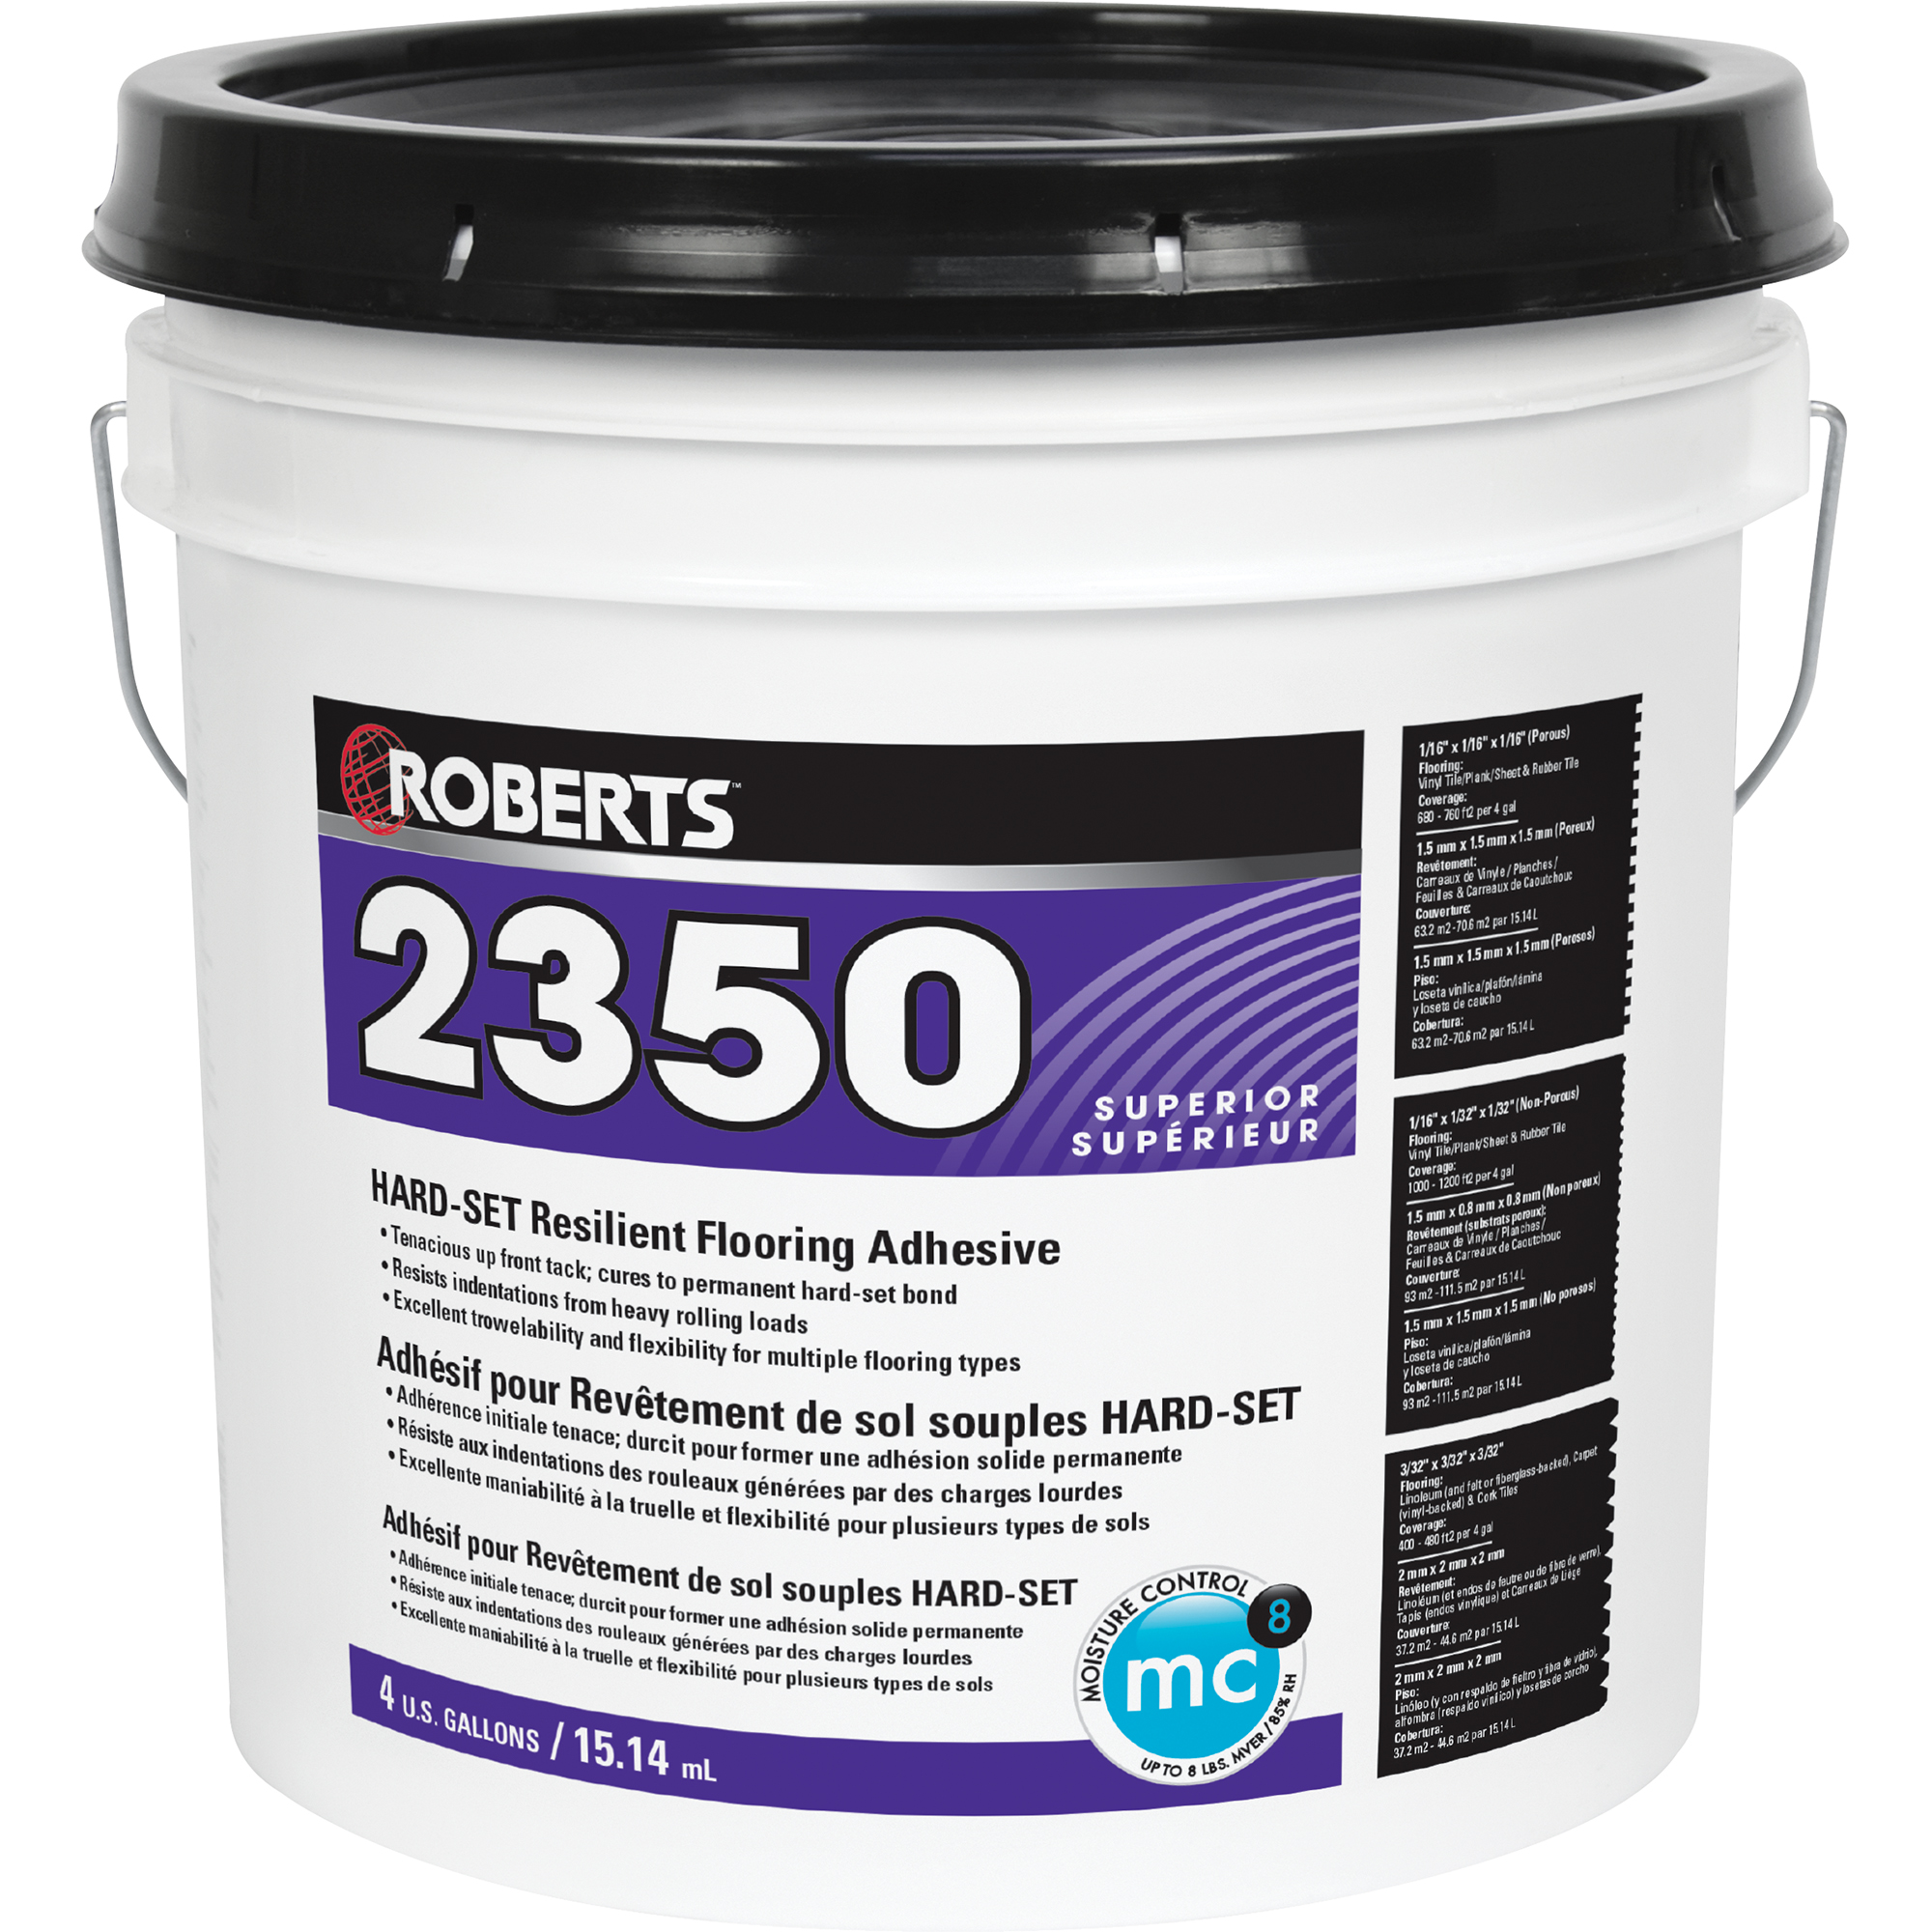 2350 HARD-SET Resilient Flooring Adhesive